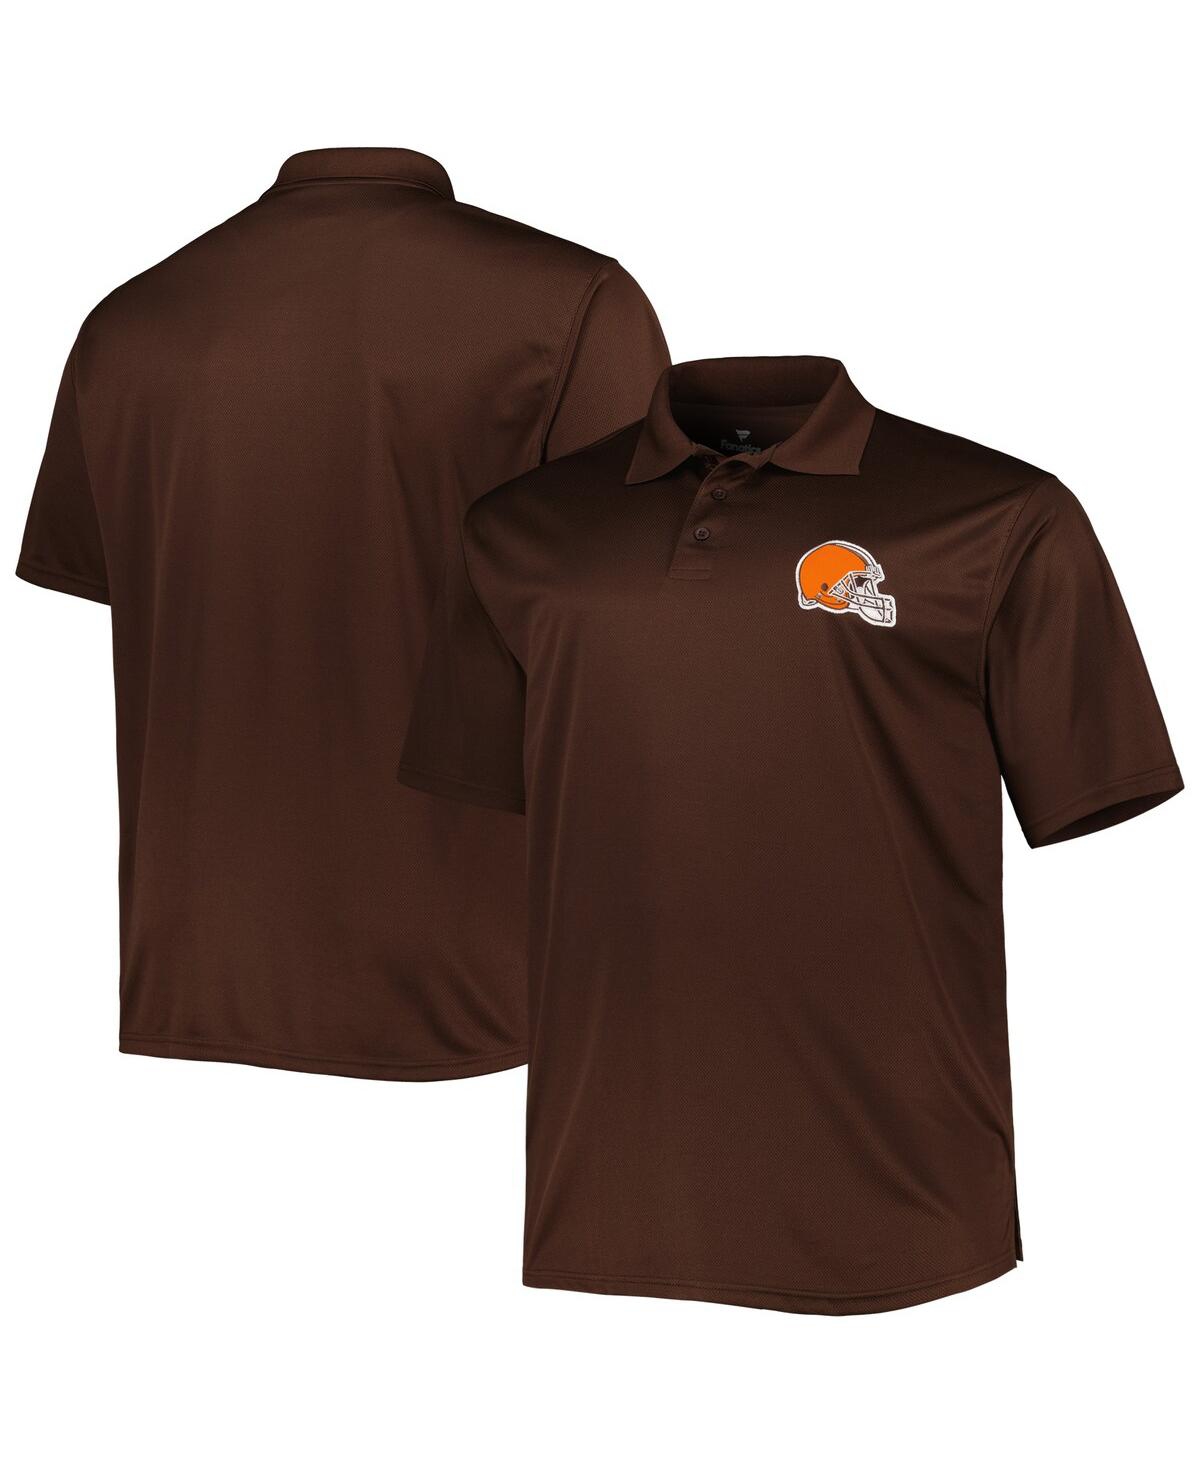 Shop Fanatics Men's Brown Cleveland Browns Big And Tall Birdseye Polo Shirt